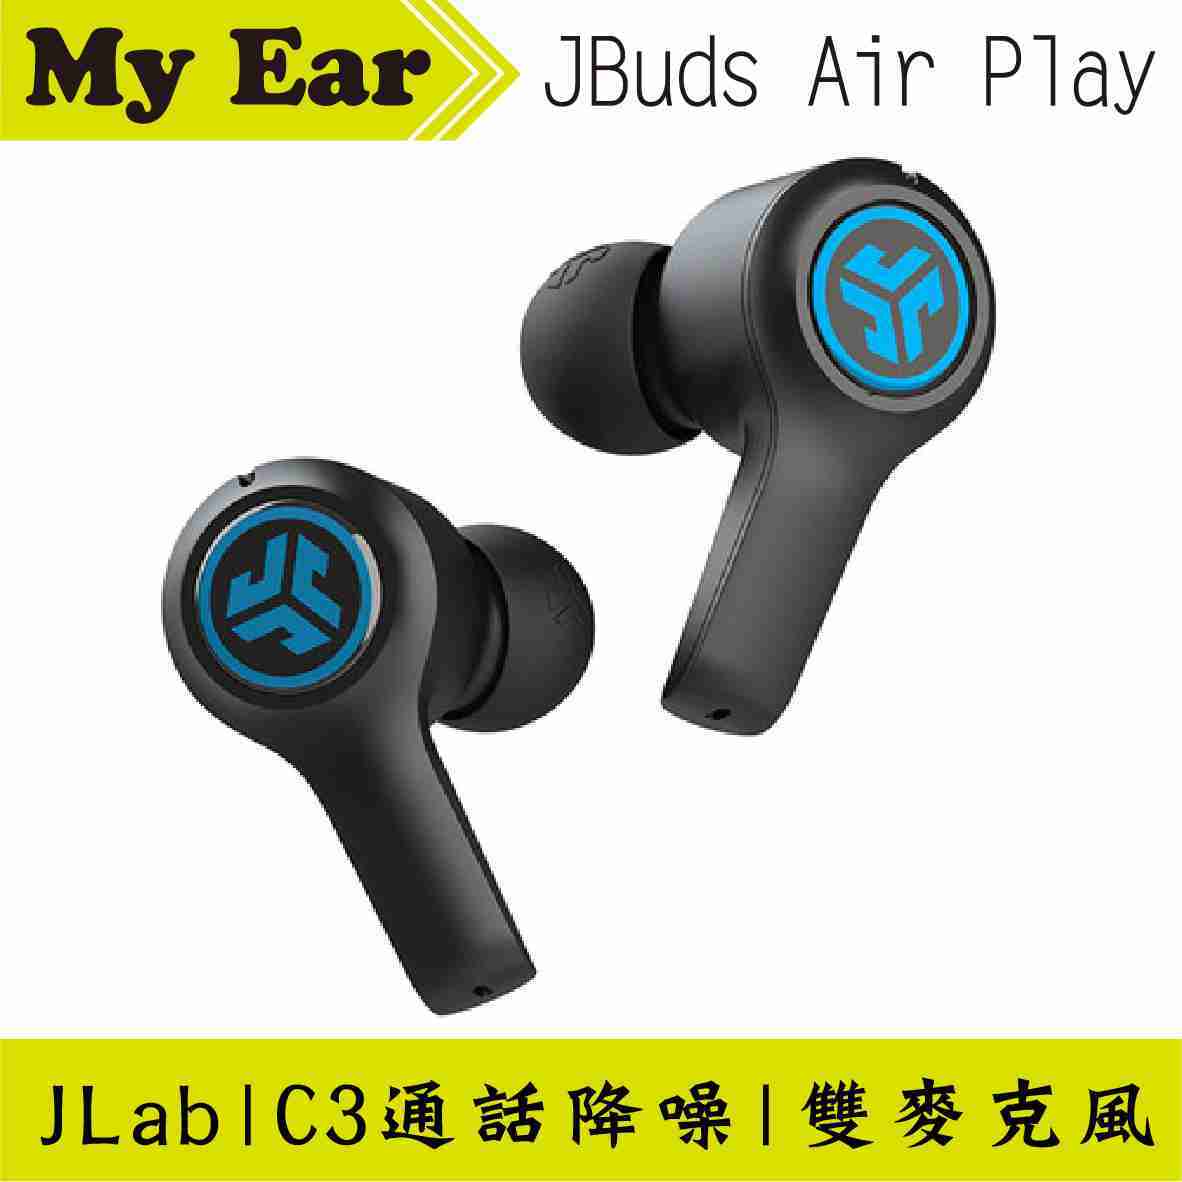 JLab JBuds Air Play 低延遲 雙麥克風 通話降噪 藍芽 電競 耳機 | My Ear 耳機專門店